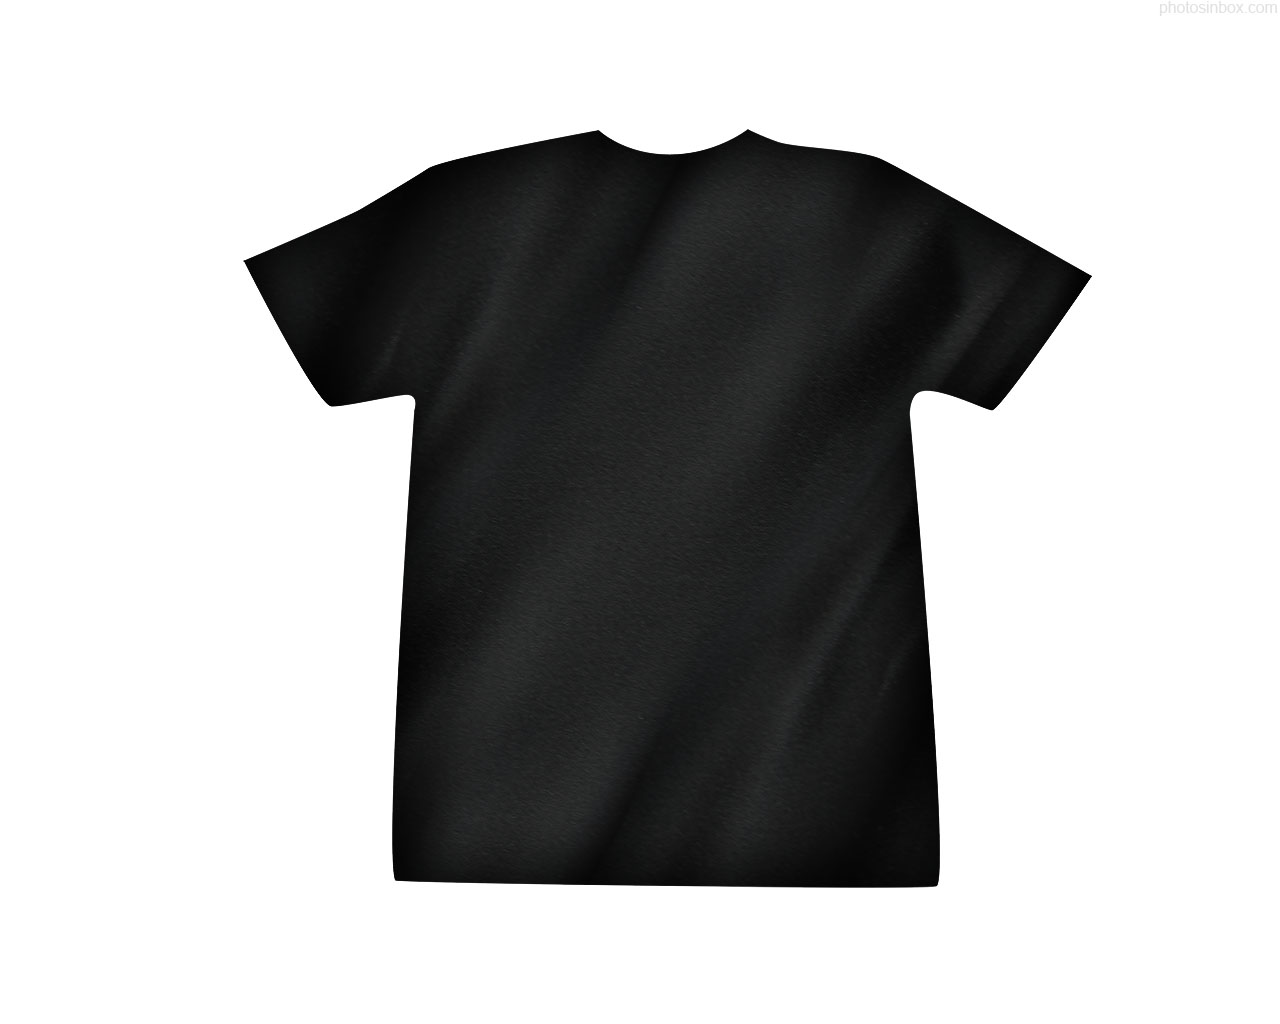 Black T-Shirt Template